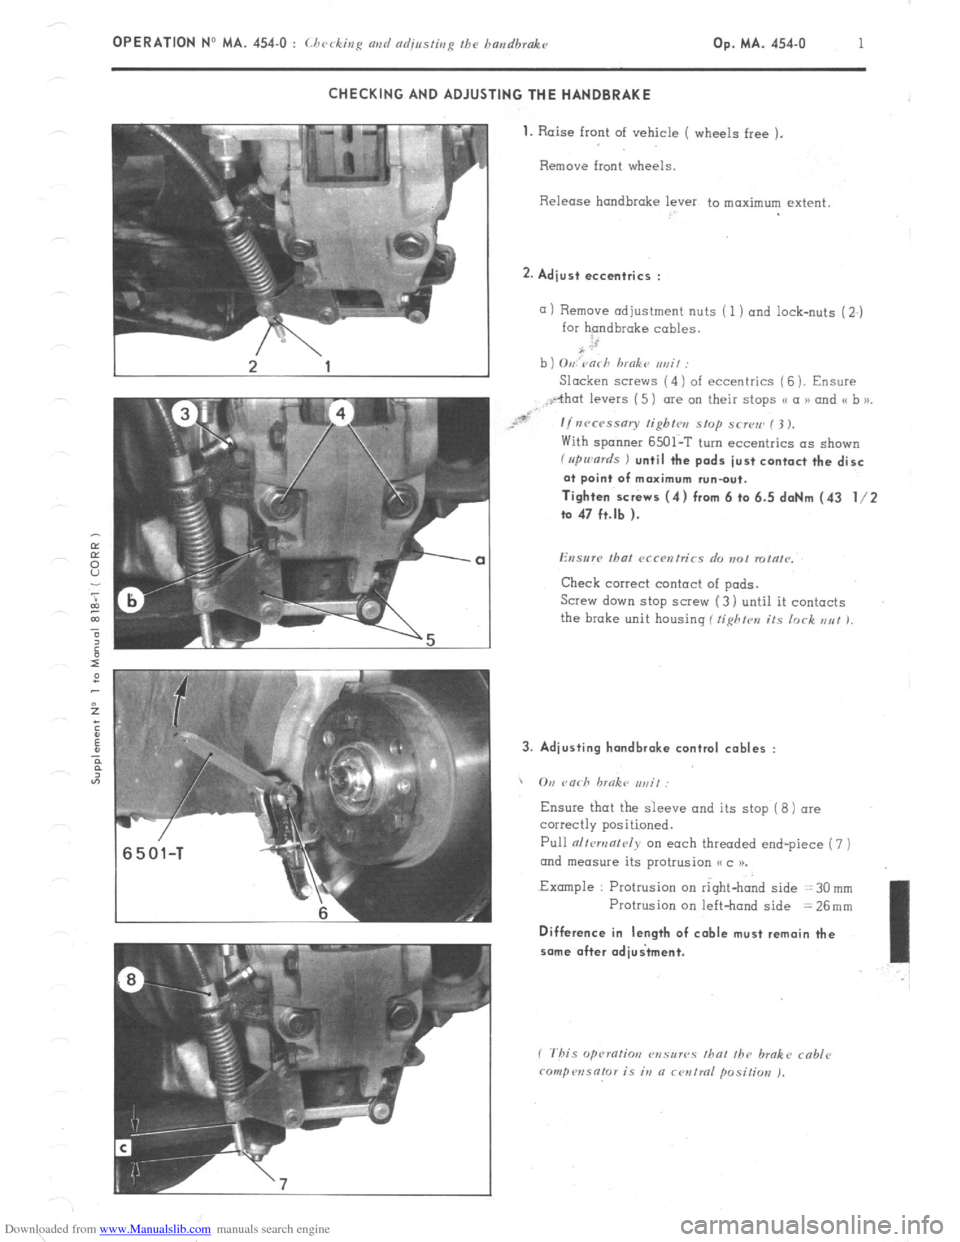 Citroen CX 1980 1.G Workshop Manual Downloaded from www.Manualslib.com manuals search engine OPERATION No MA. 454-O : Lhcckiu~ avd adjnsfbrR fhe bandbrake op. MA. 454-u I CHECKING AND ADJUSTING THE HANDBRAKE 
1. 
Raise front of vehicle 